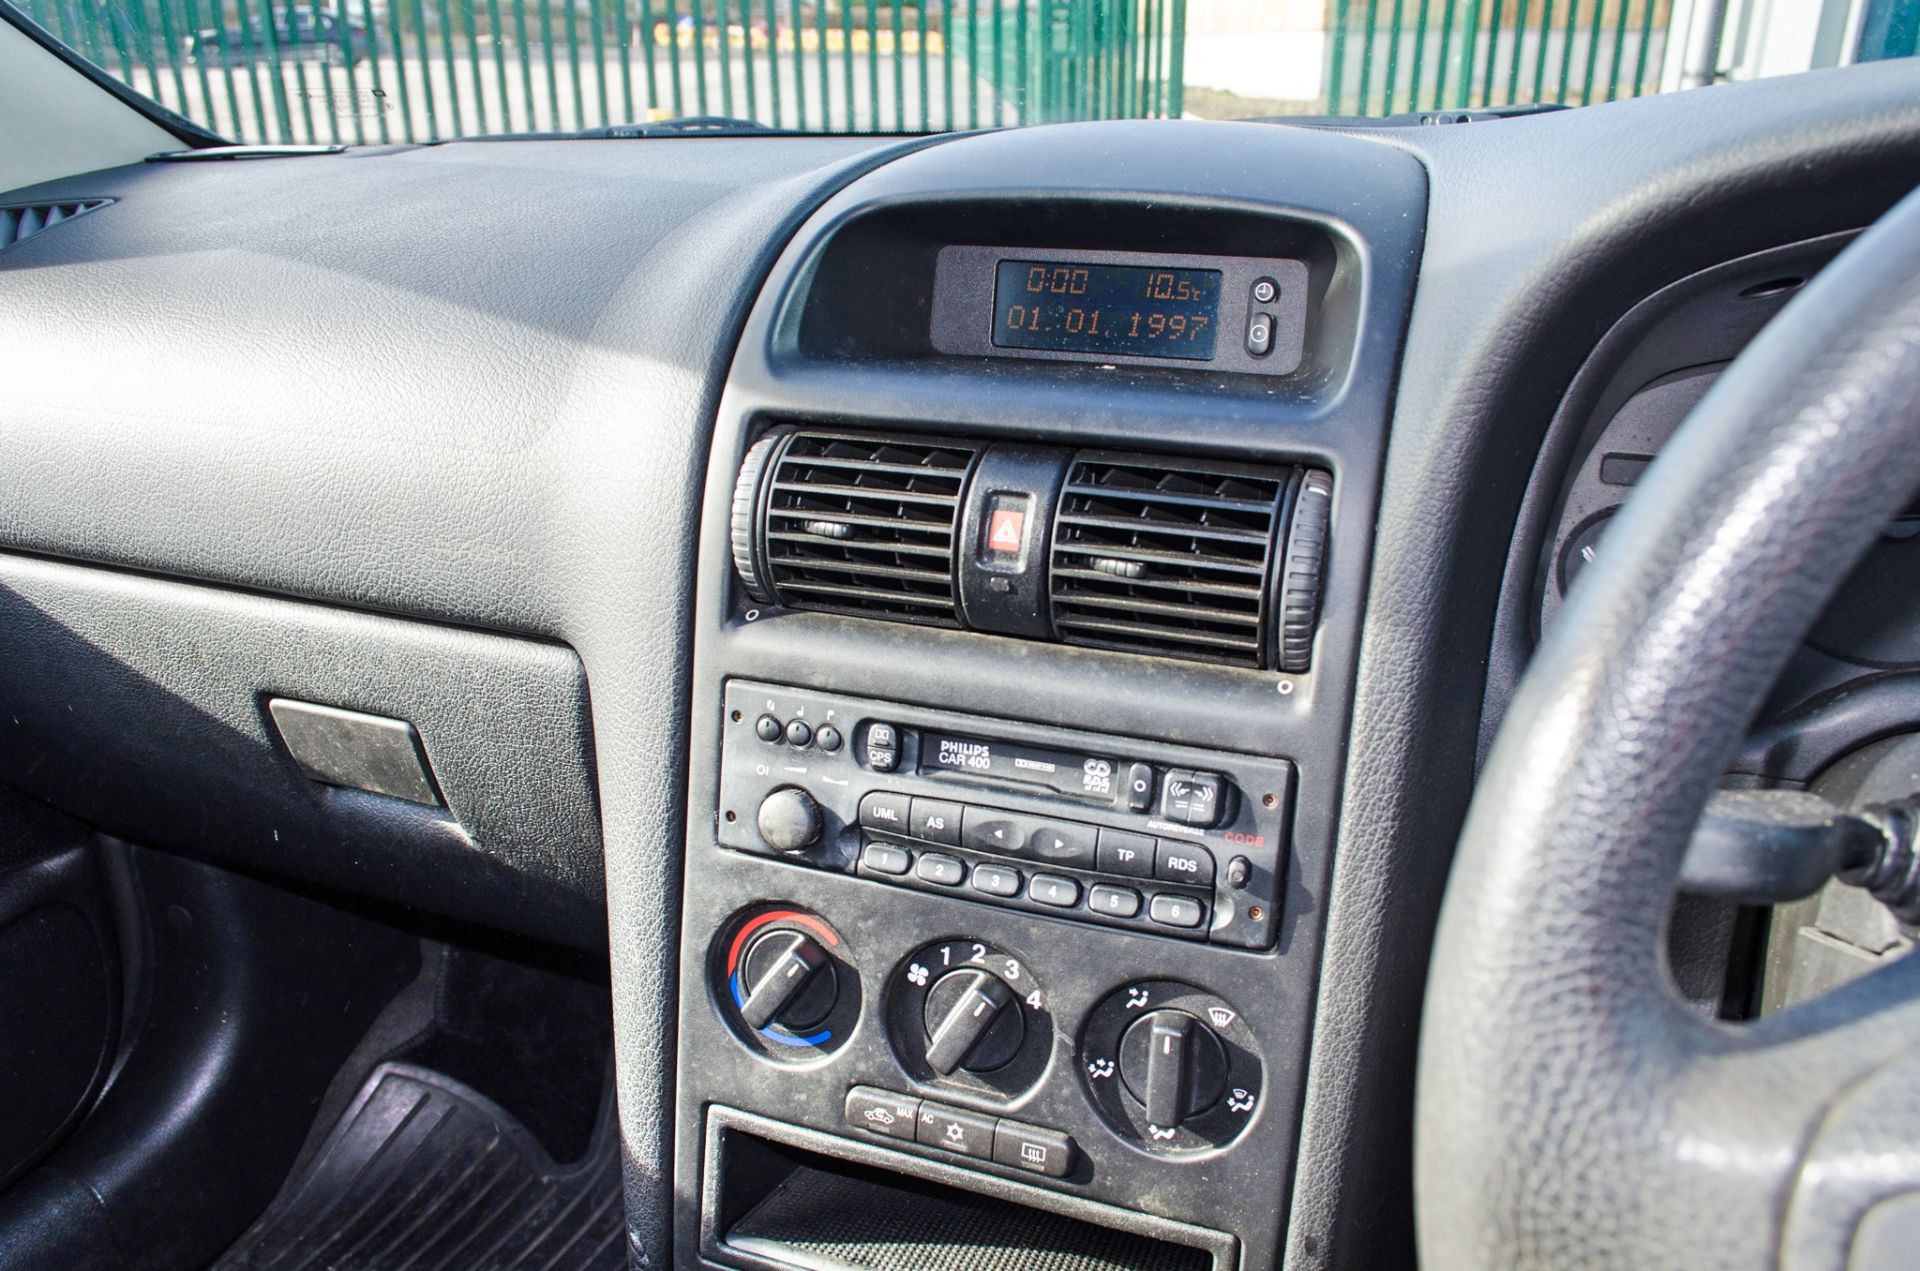 1999 Vauxhall Astra LS DI 16V 1995cc 5 door hatchback - Image 43 of 55